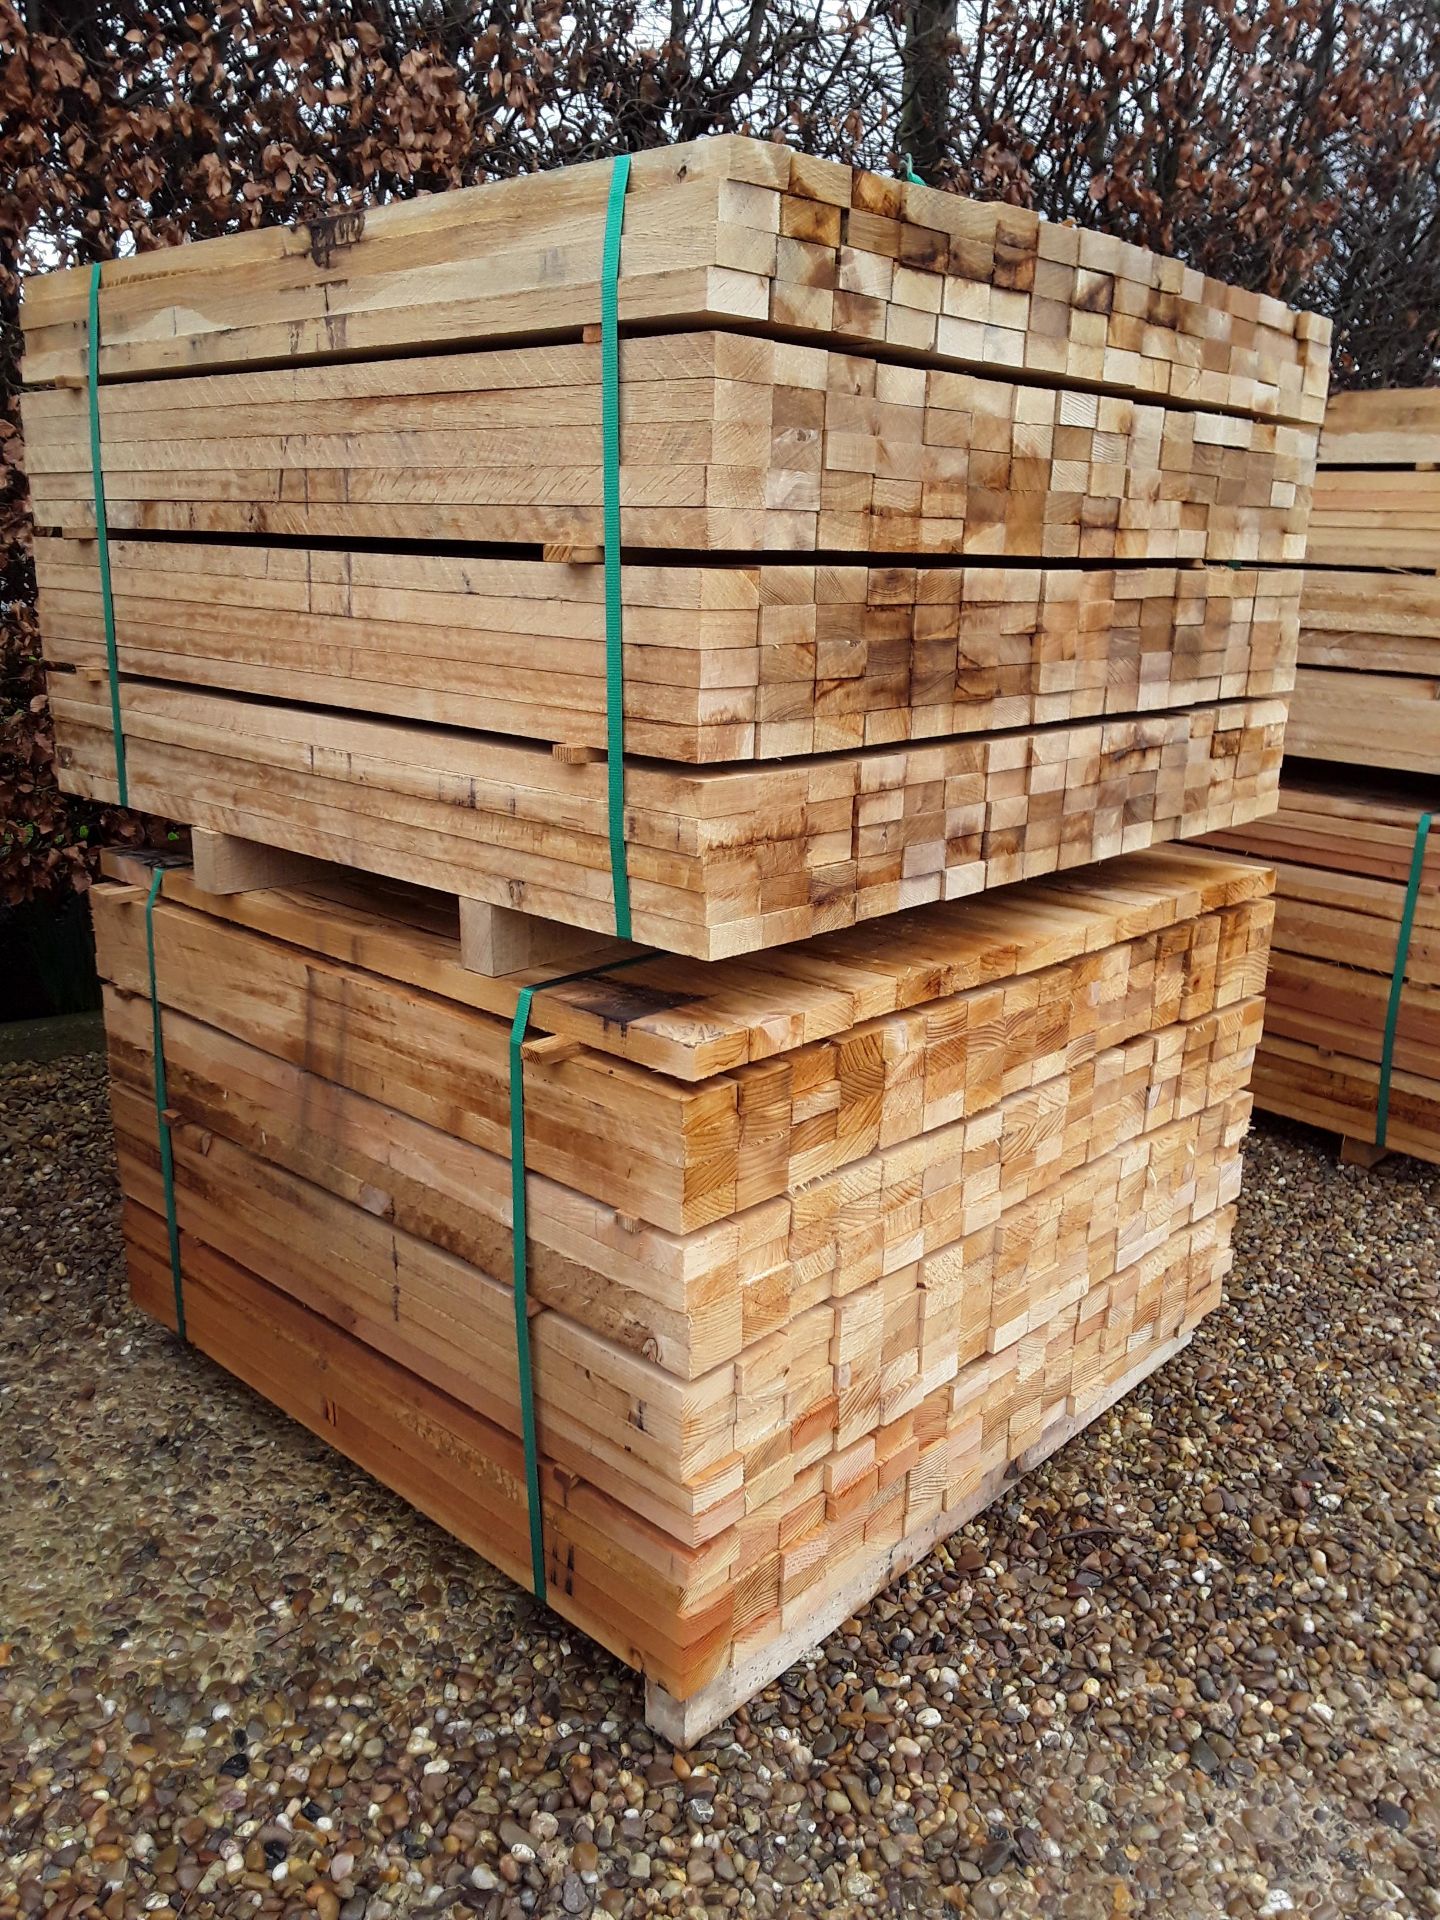 150x Hardwood Fresh Sawn English Oak Palings / Timber Offcuts - Image 2 of 5